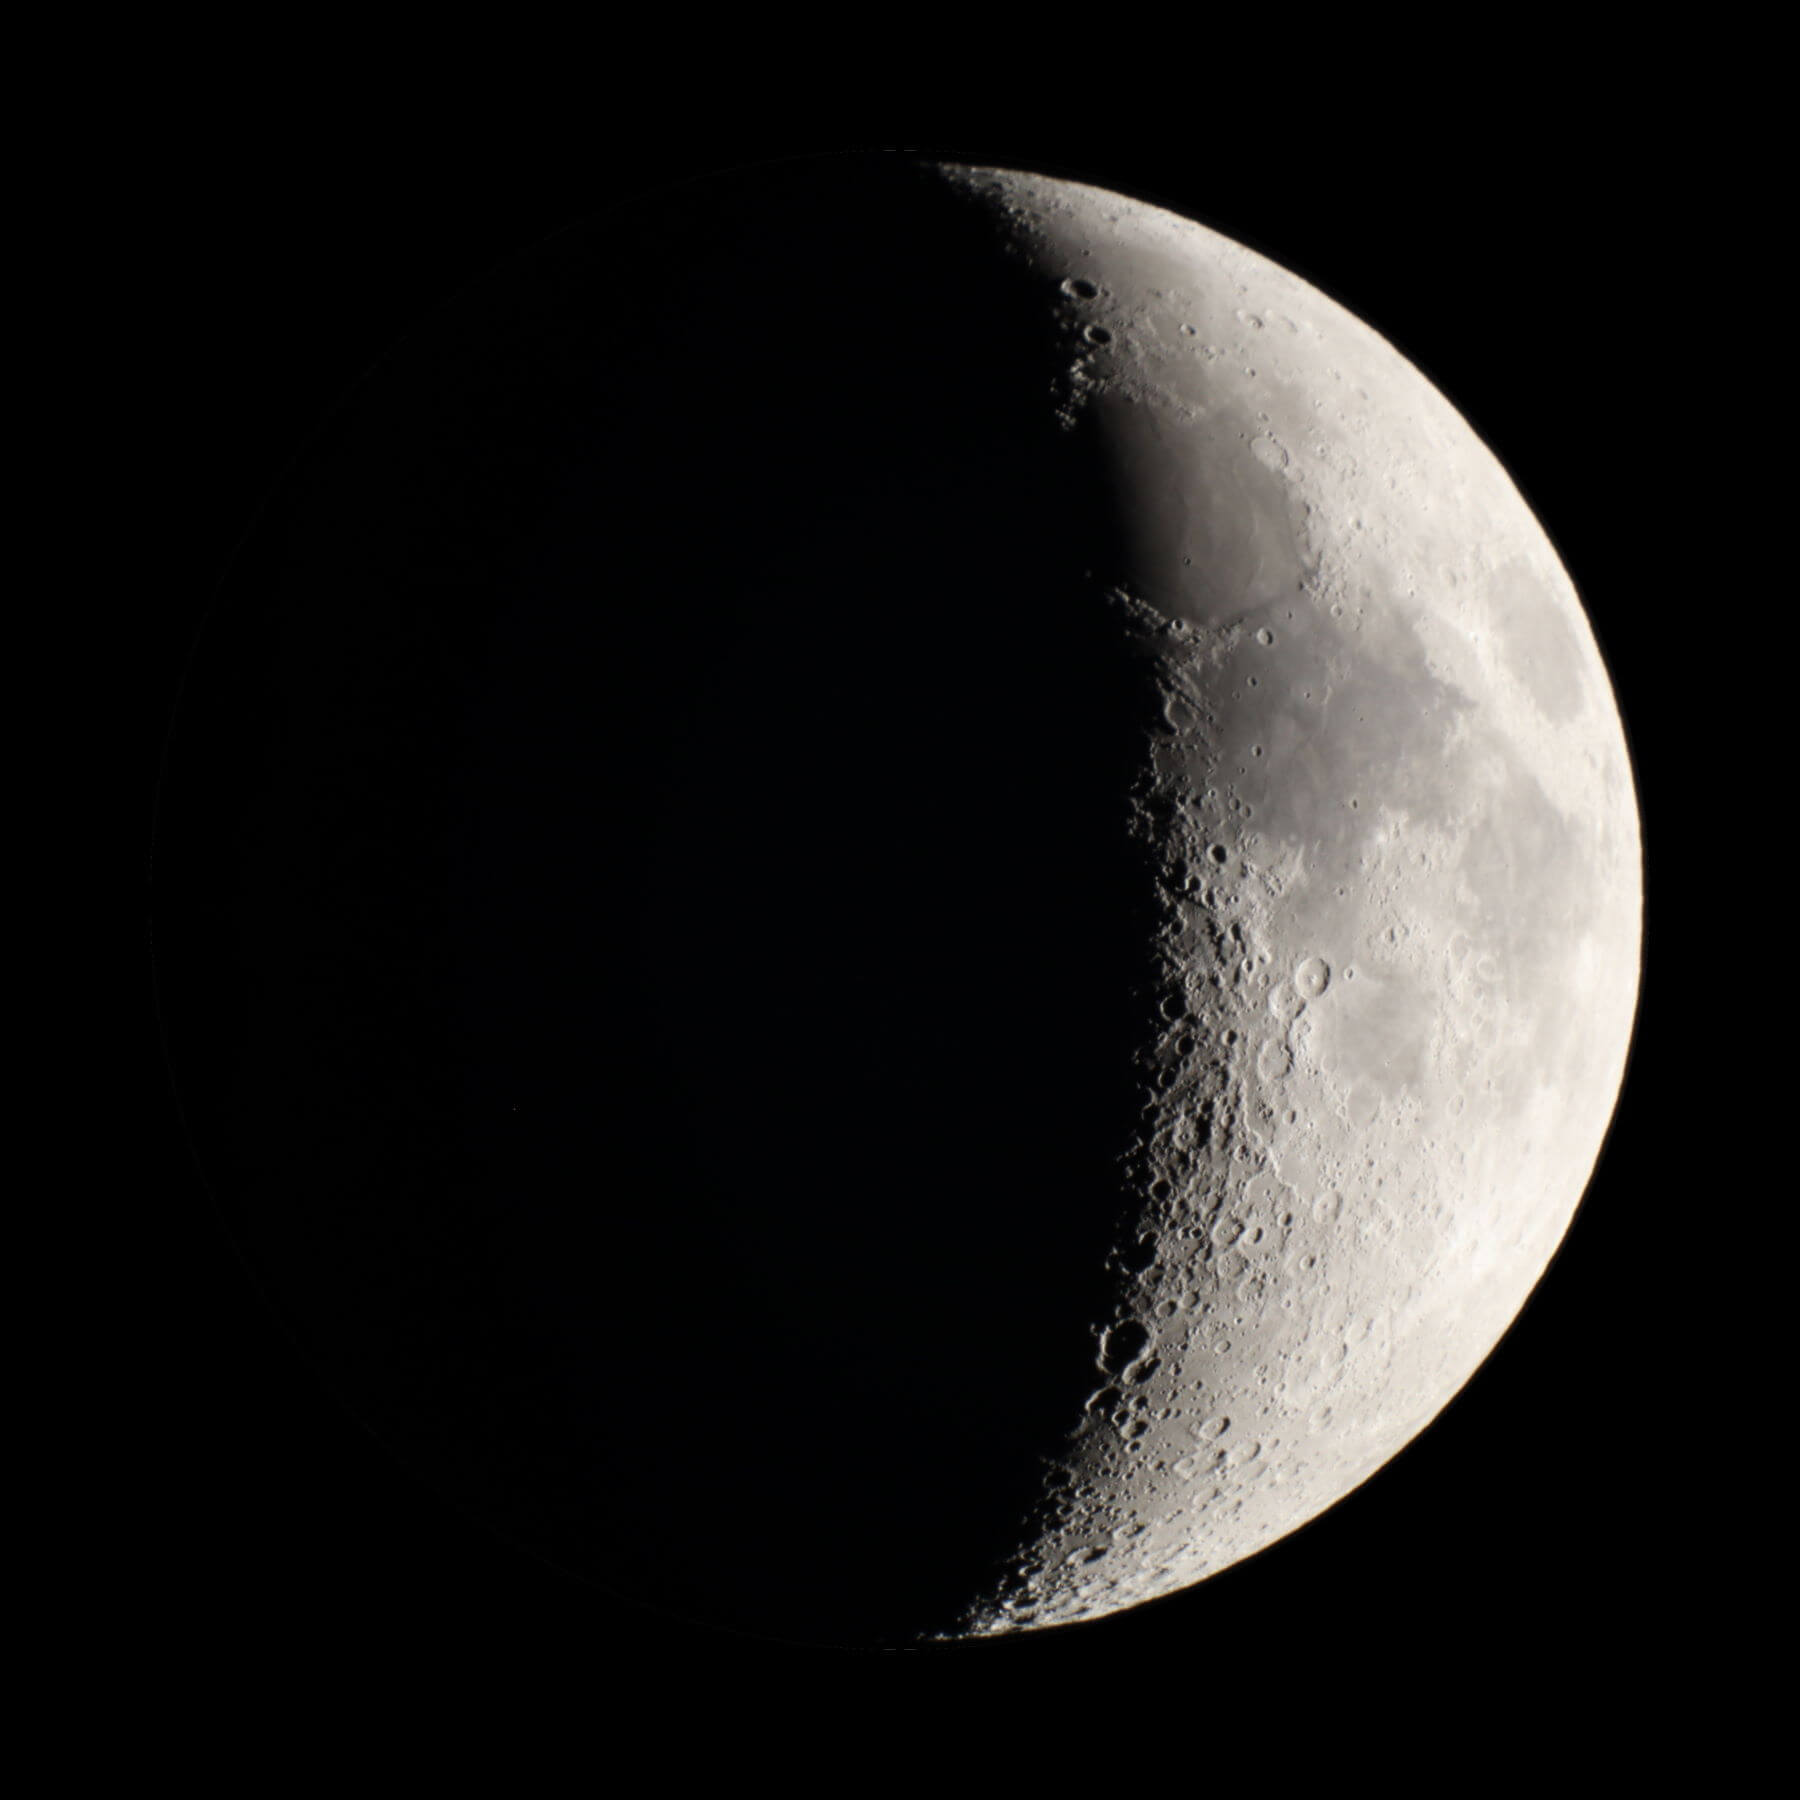 Waxing crescent Moon, 31% illumination